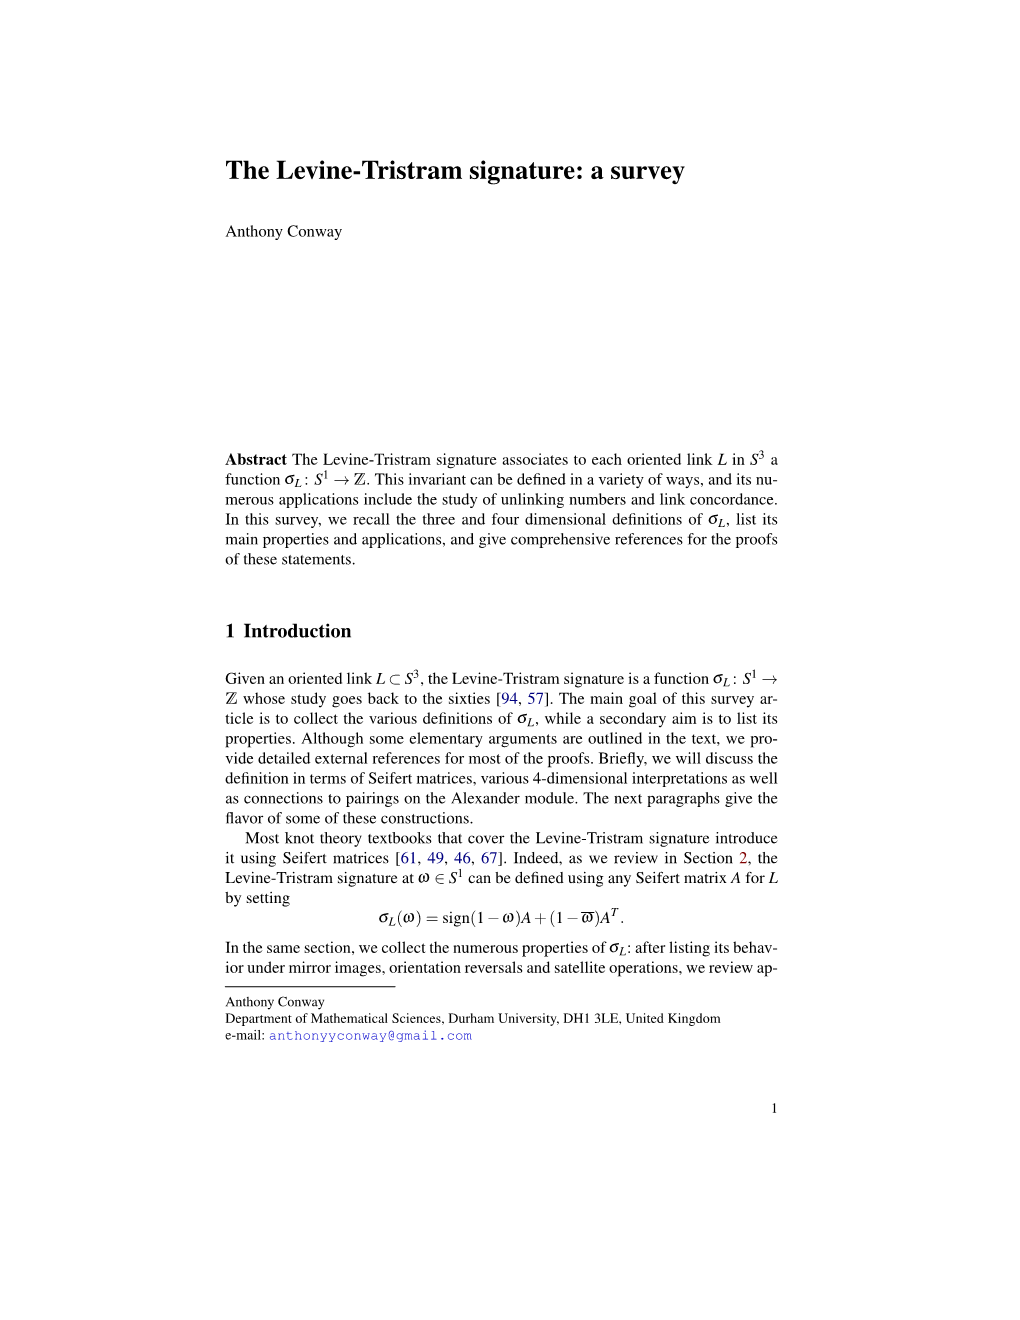 The Levine-Tristram Signature: a Survey